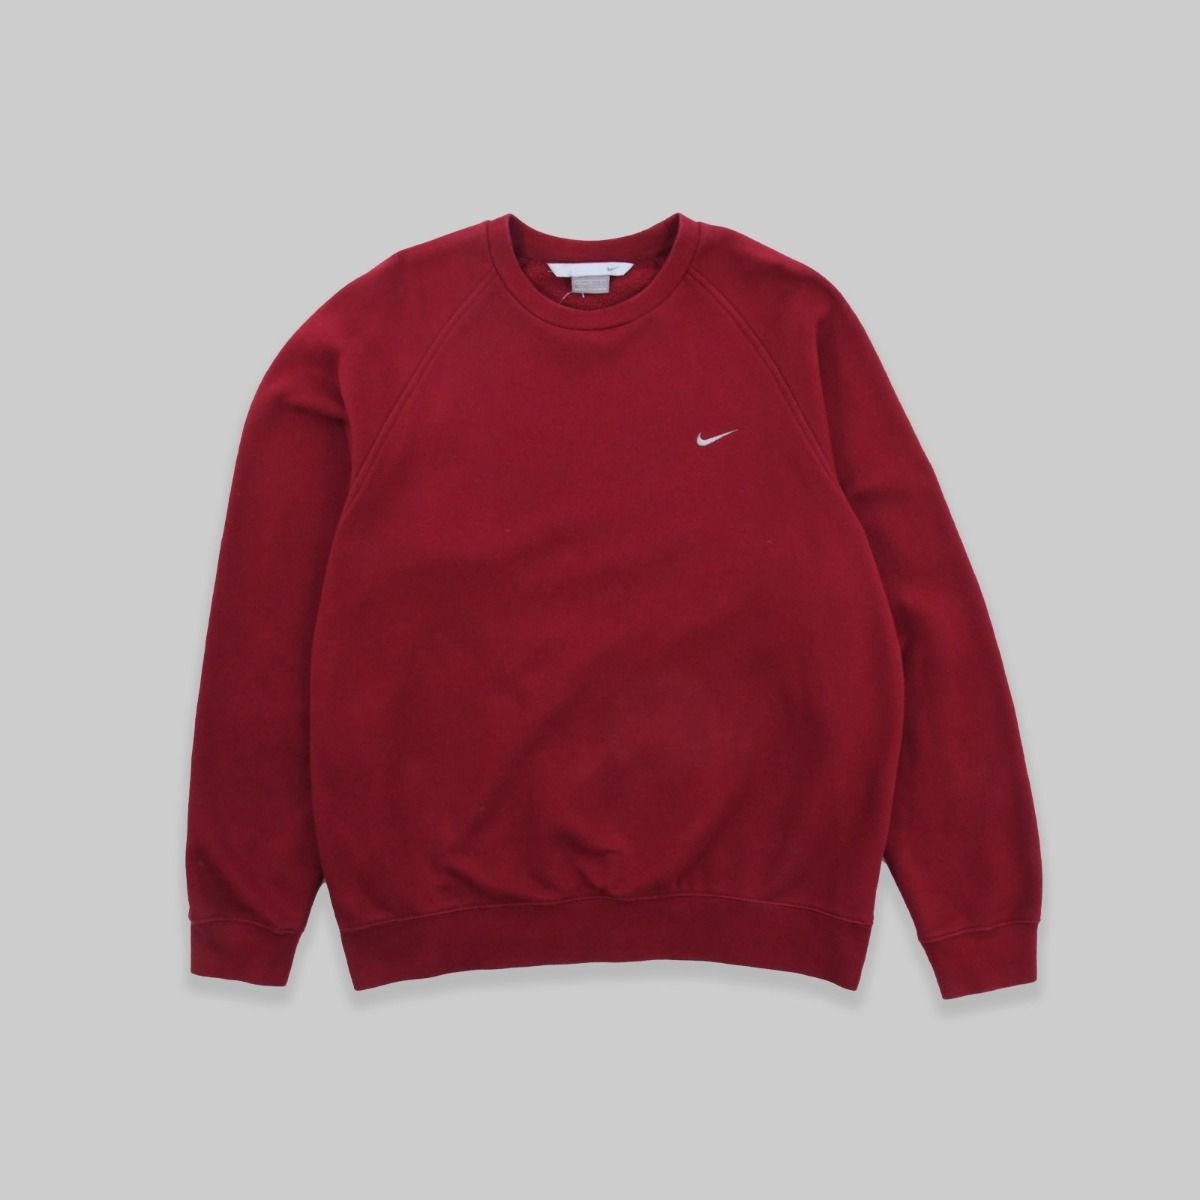 Nike Early 2000s Maroon Sweatshirt